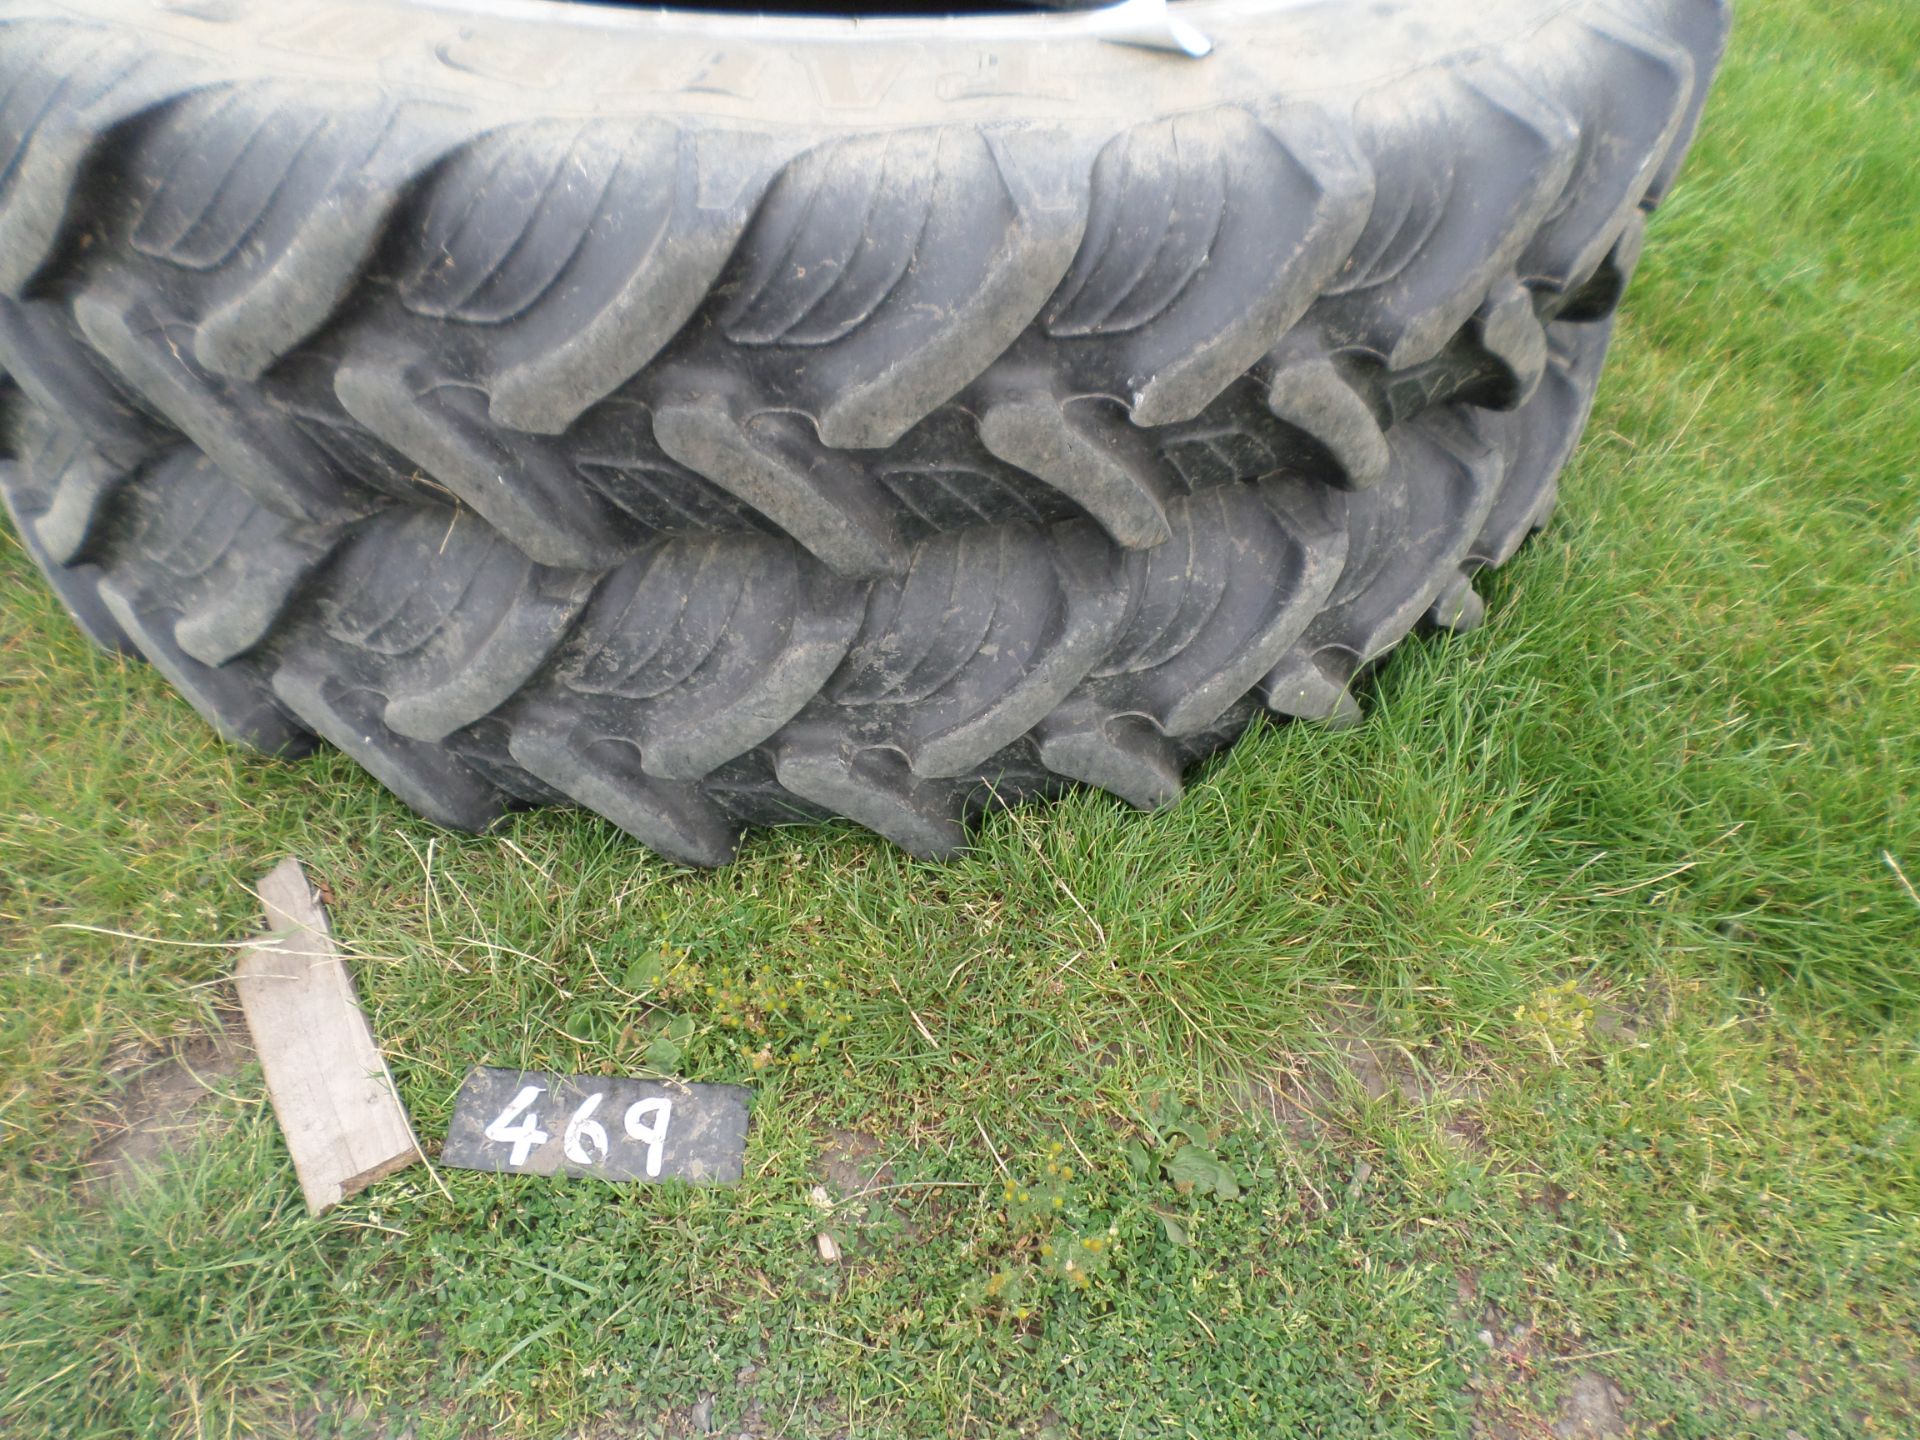 2 Taurus Soilsaver tyres ex sprayer, hold air, 300/95/46 (12.4/46) - Image 2 of 2